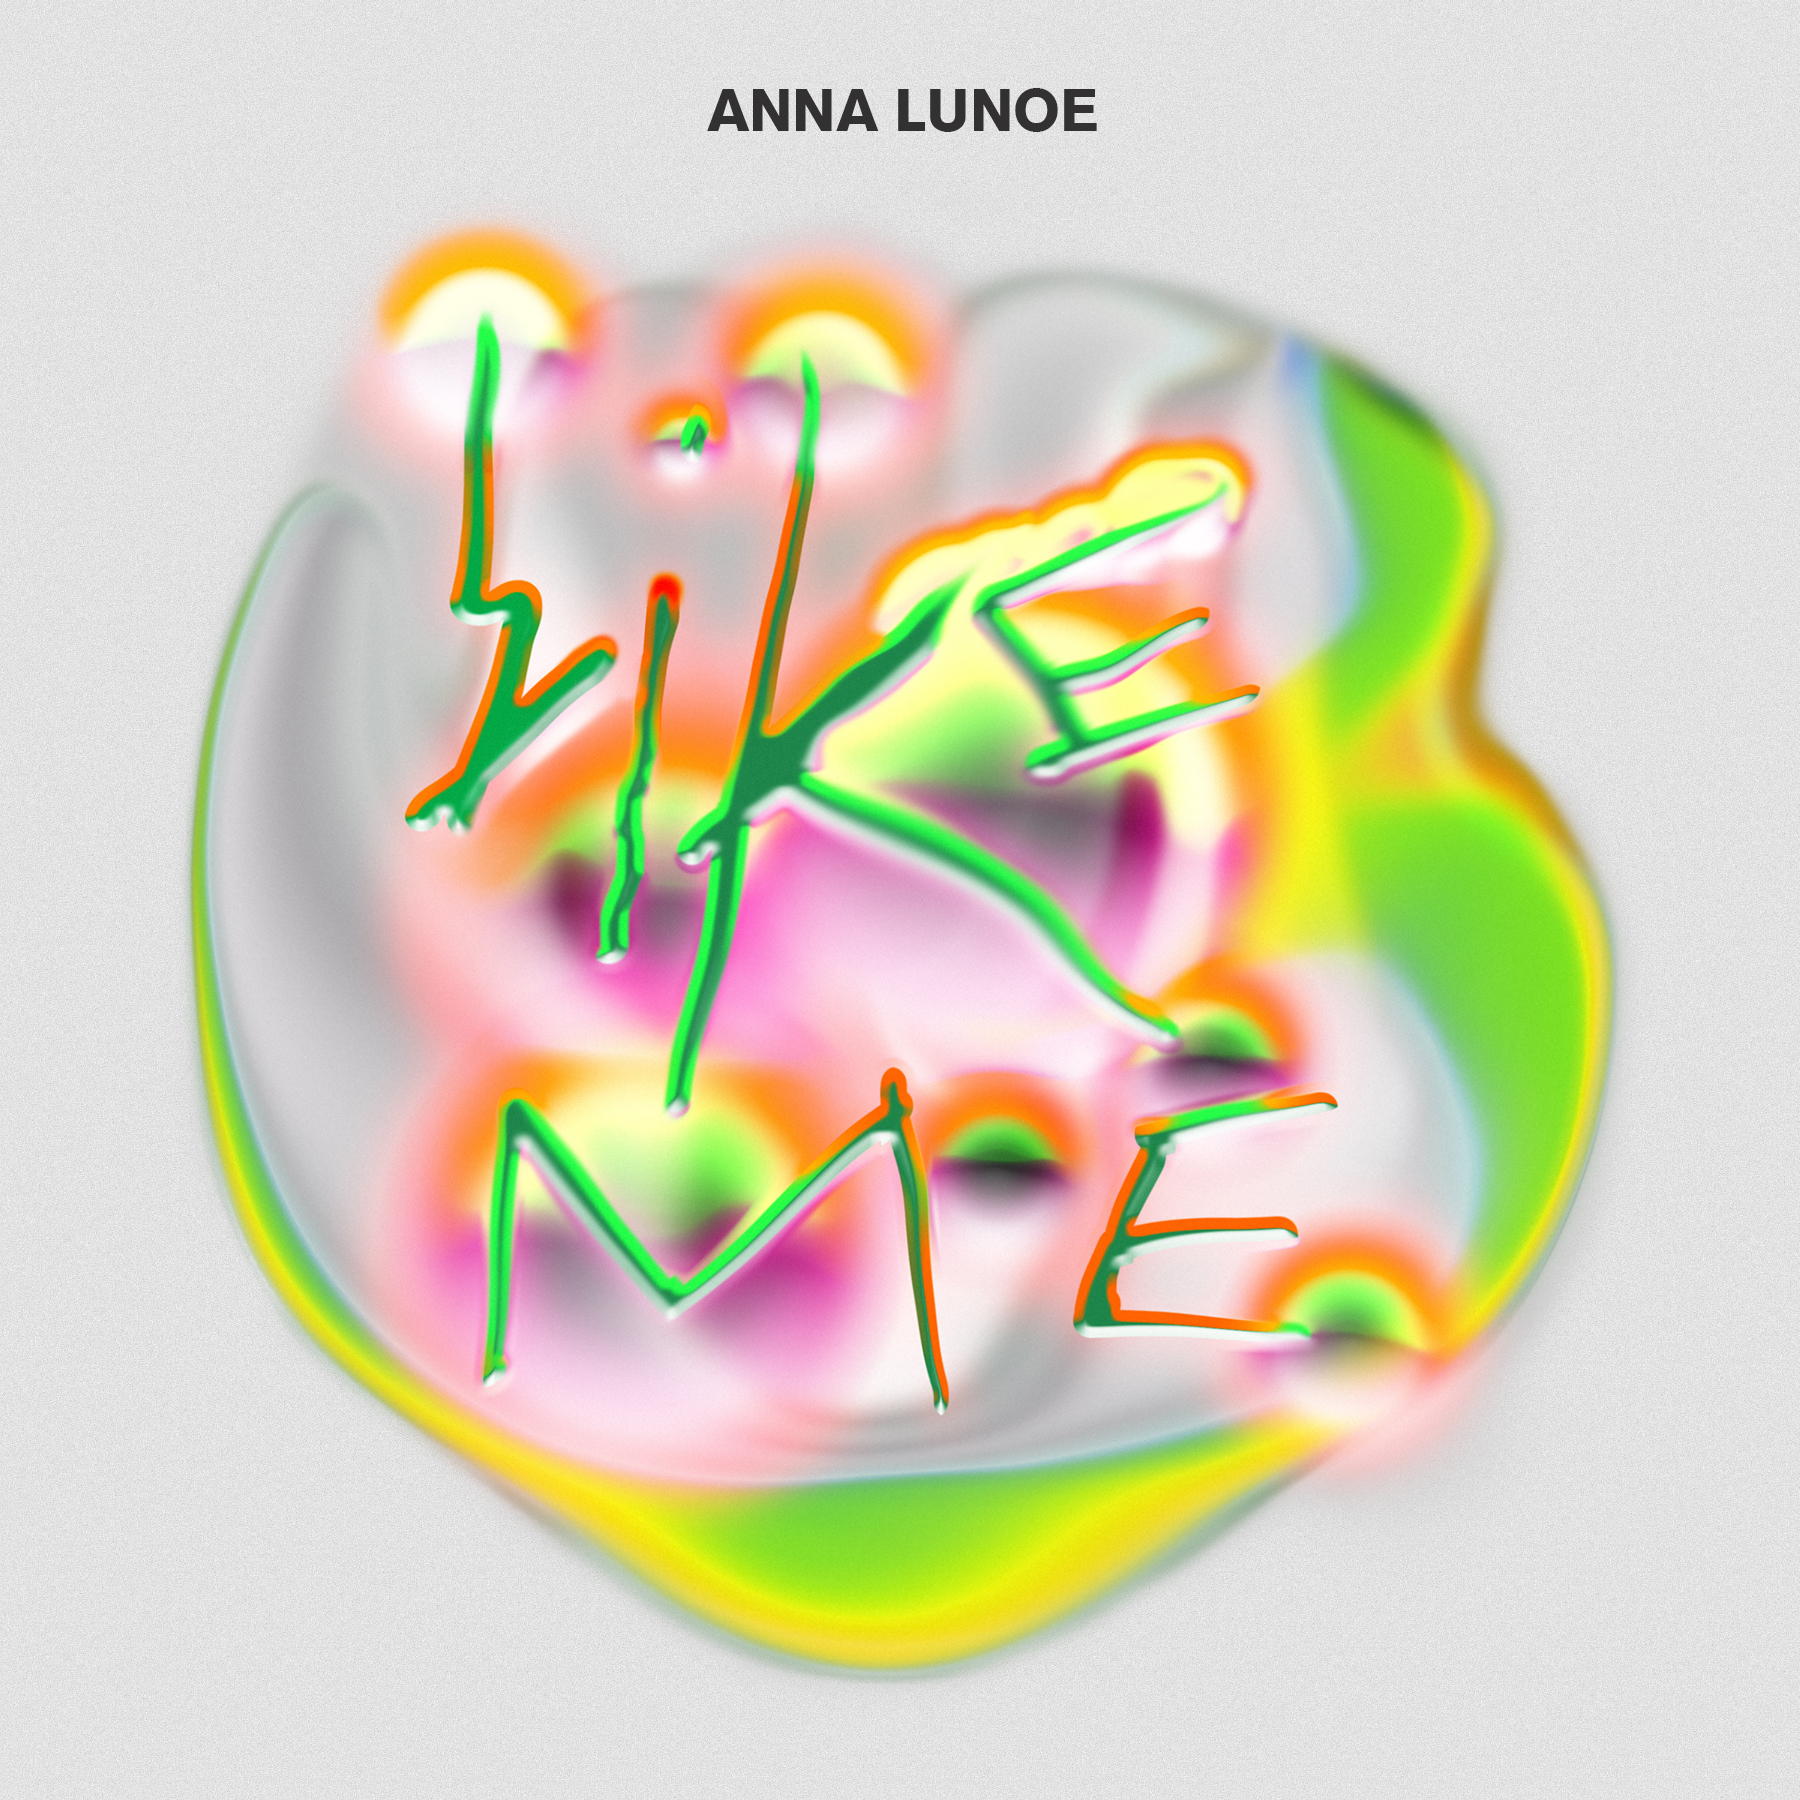 Anna Lunoe – Like Me Artwork